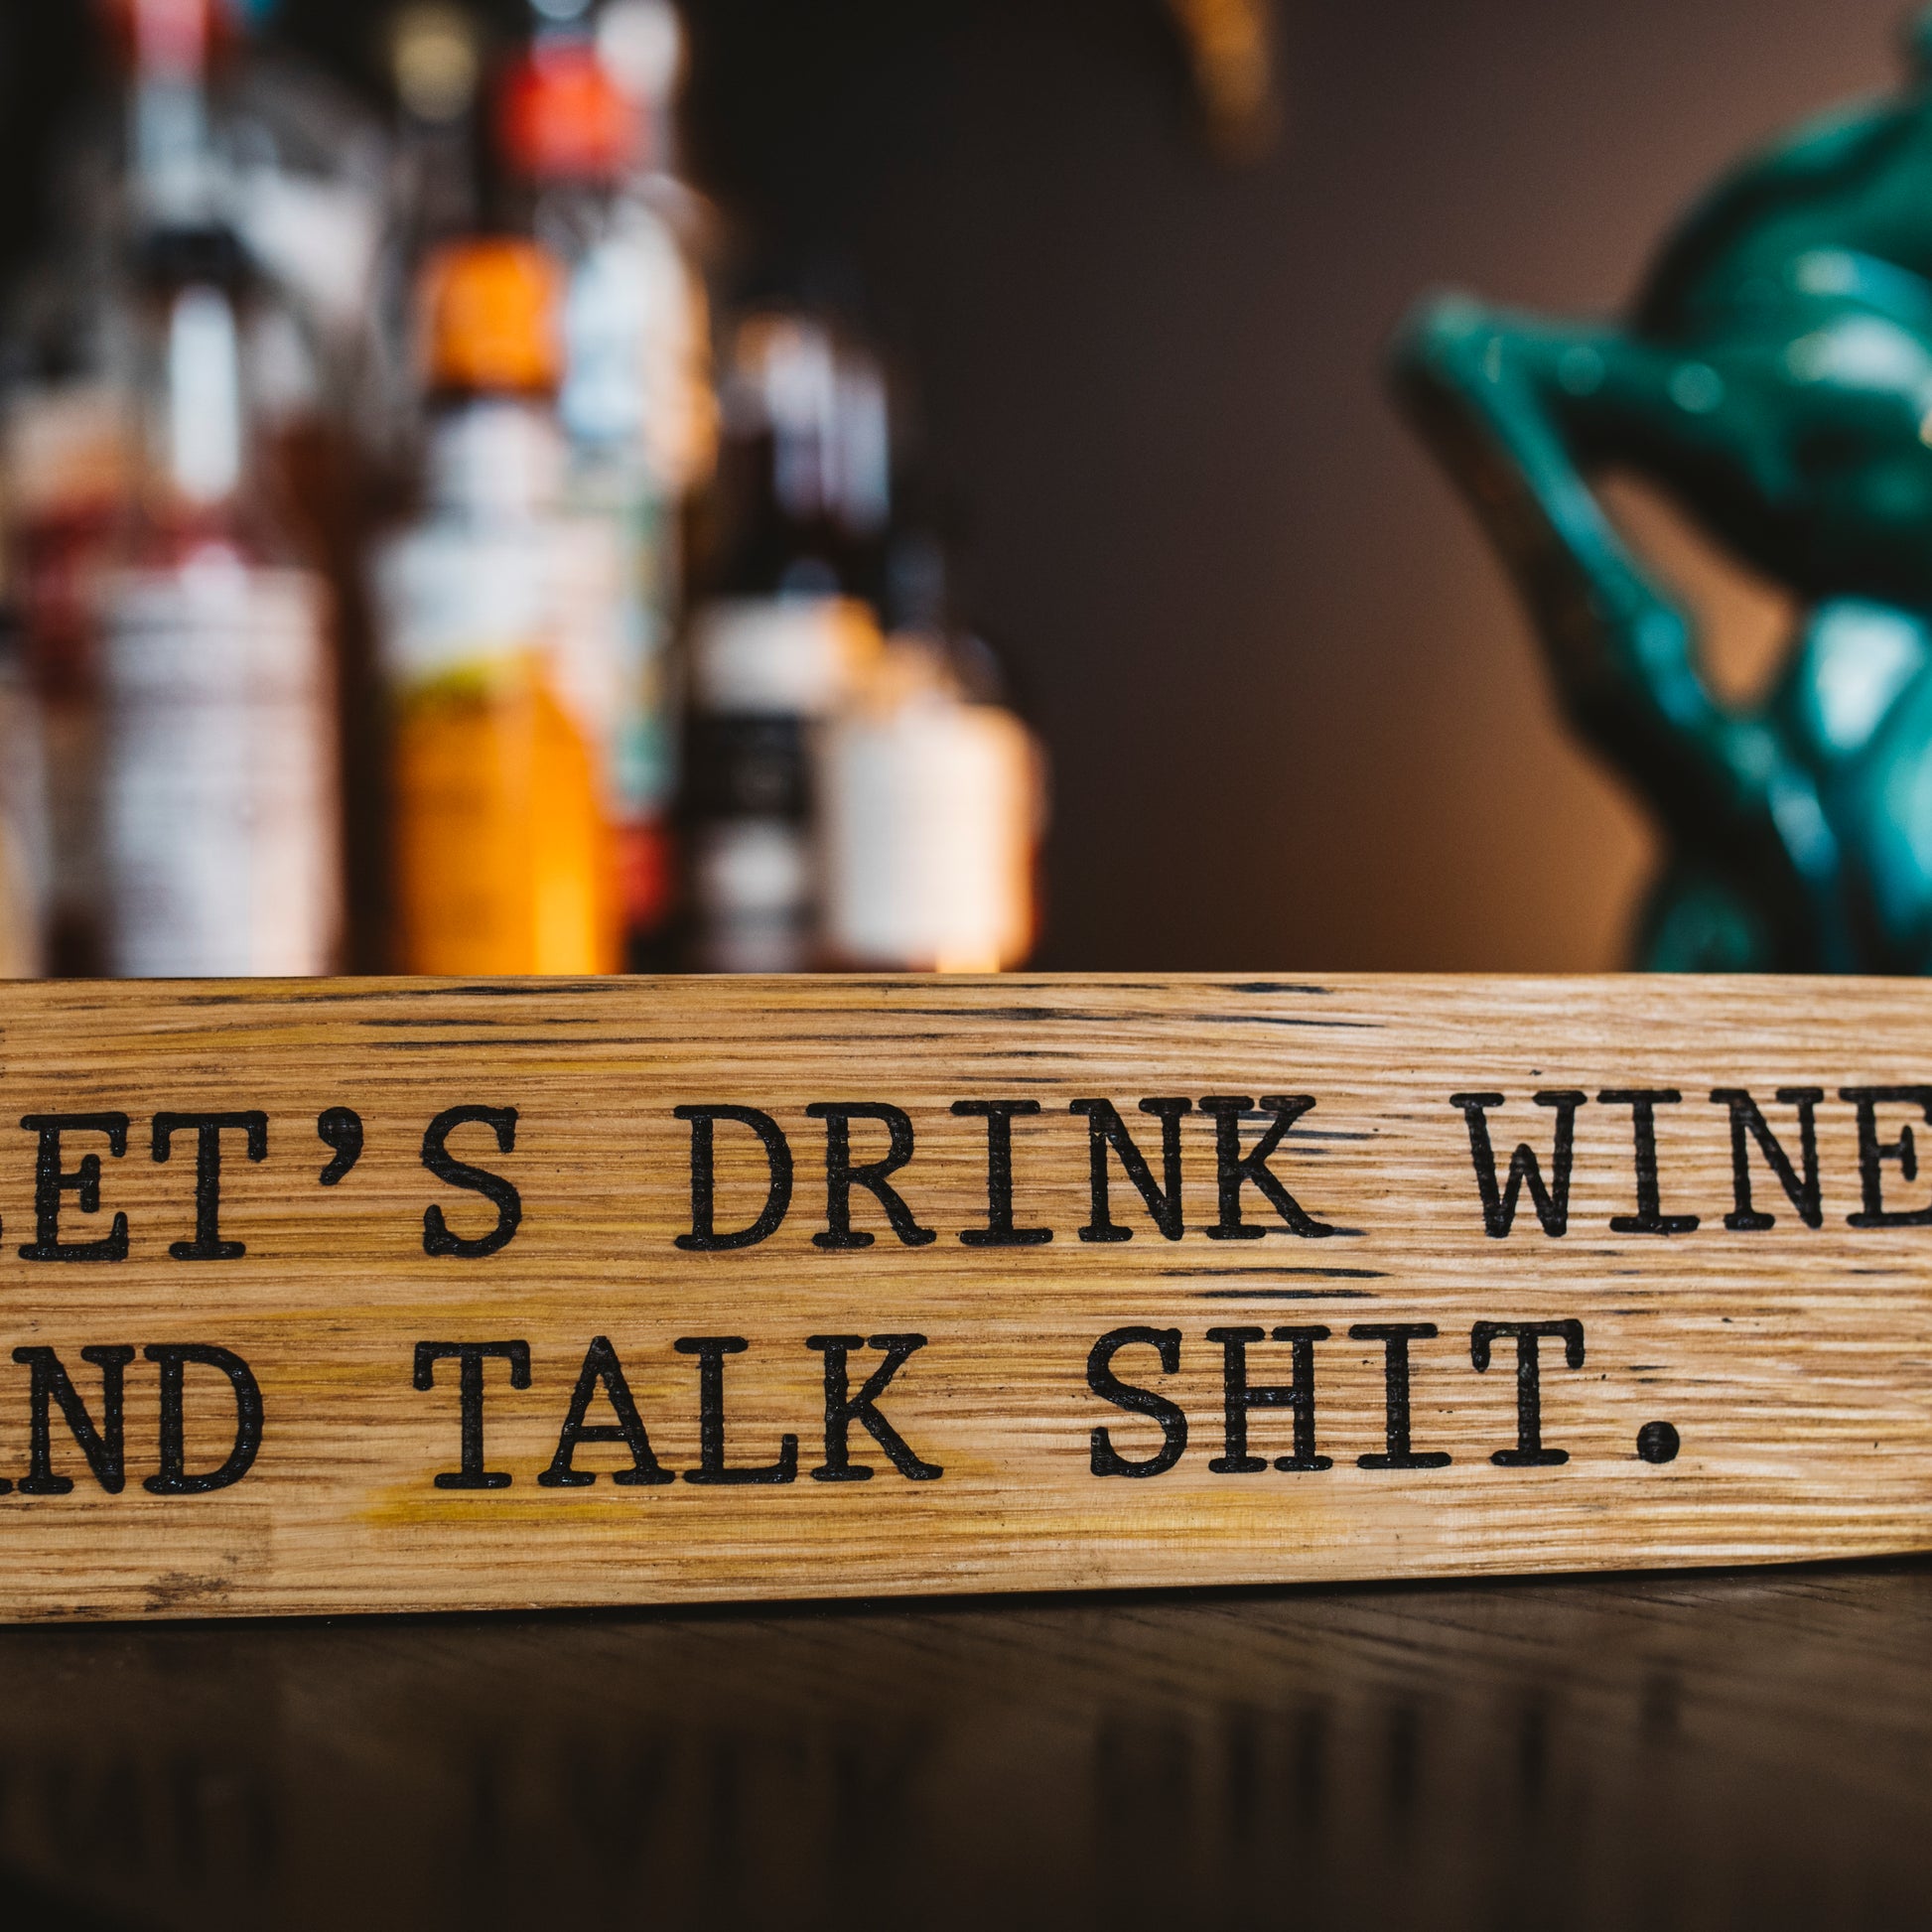 Let's Drink Wine and Talk Sh*t - Wood Sign - Motor City Barrels